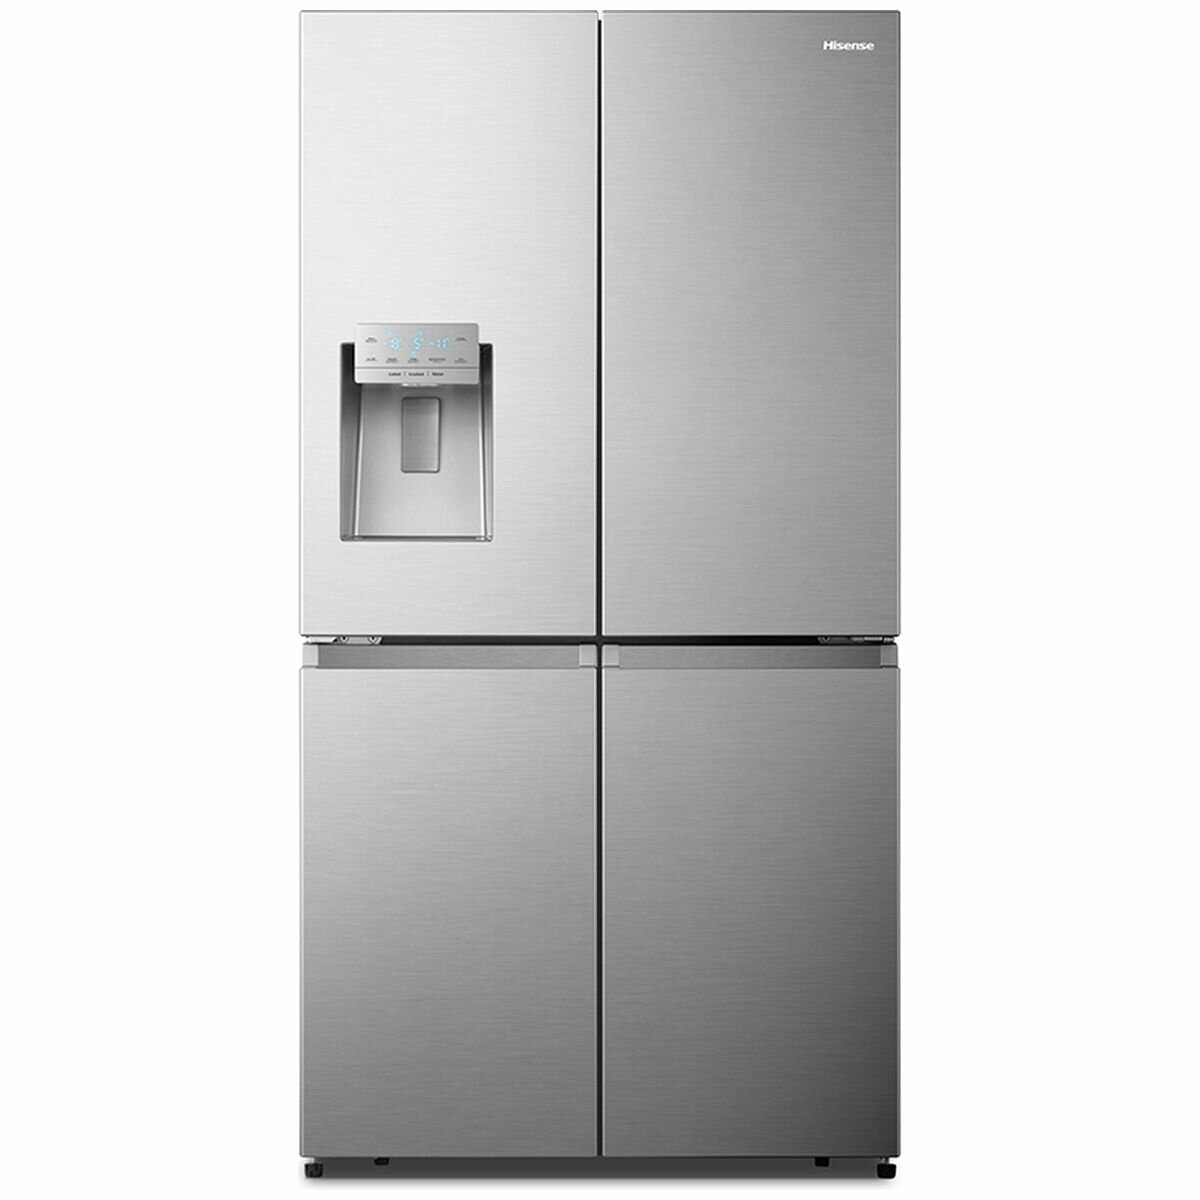 hisense-585l-pureflat-french-door-fridge-stainless-steel-living